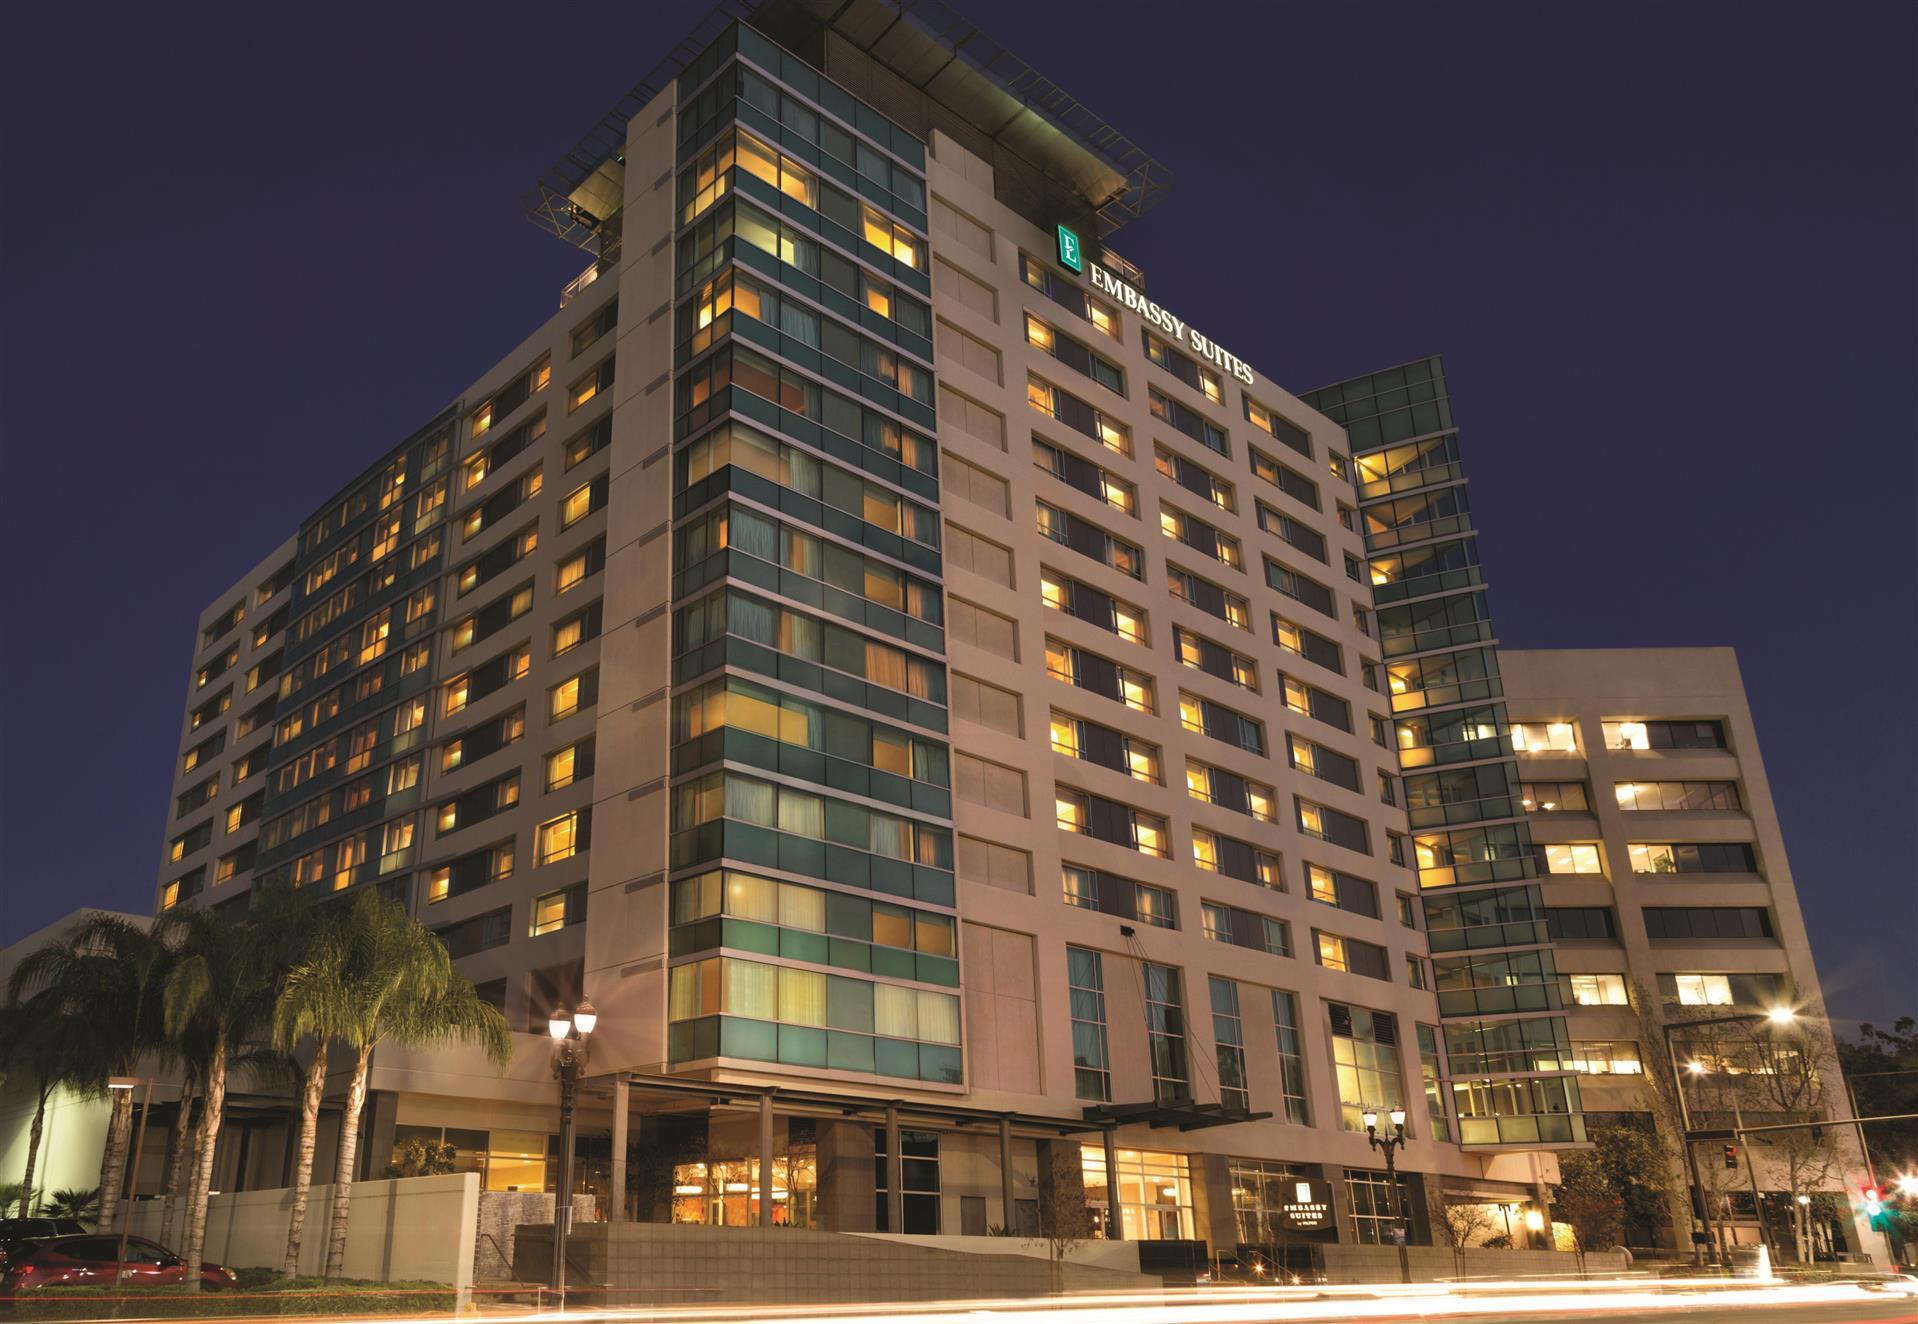 Embassy Suites by Hilton Los Angeles Glendale in Glendale, CA